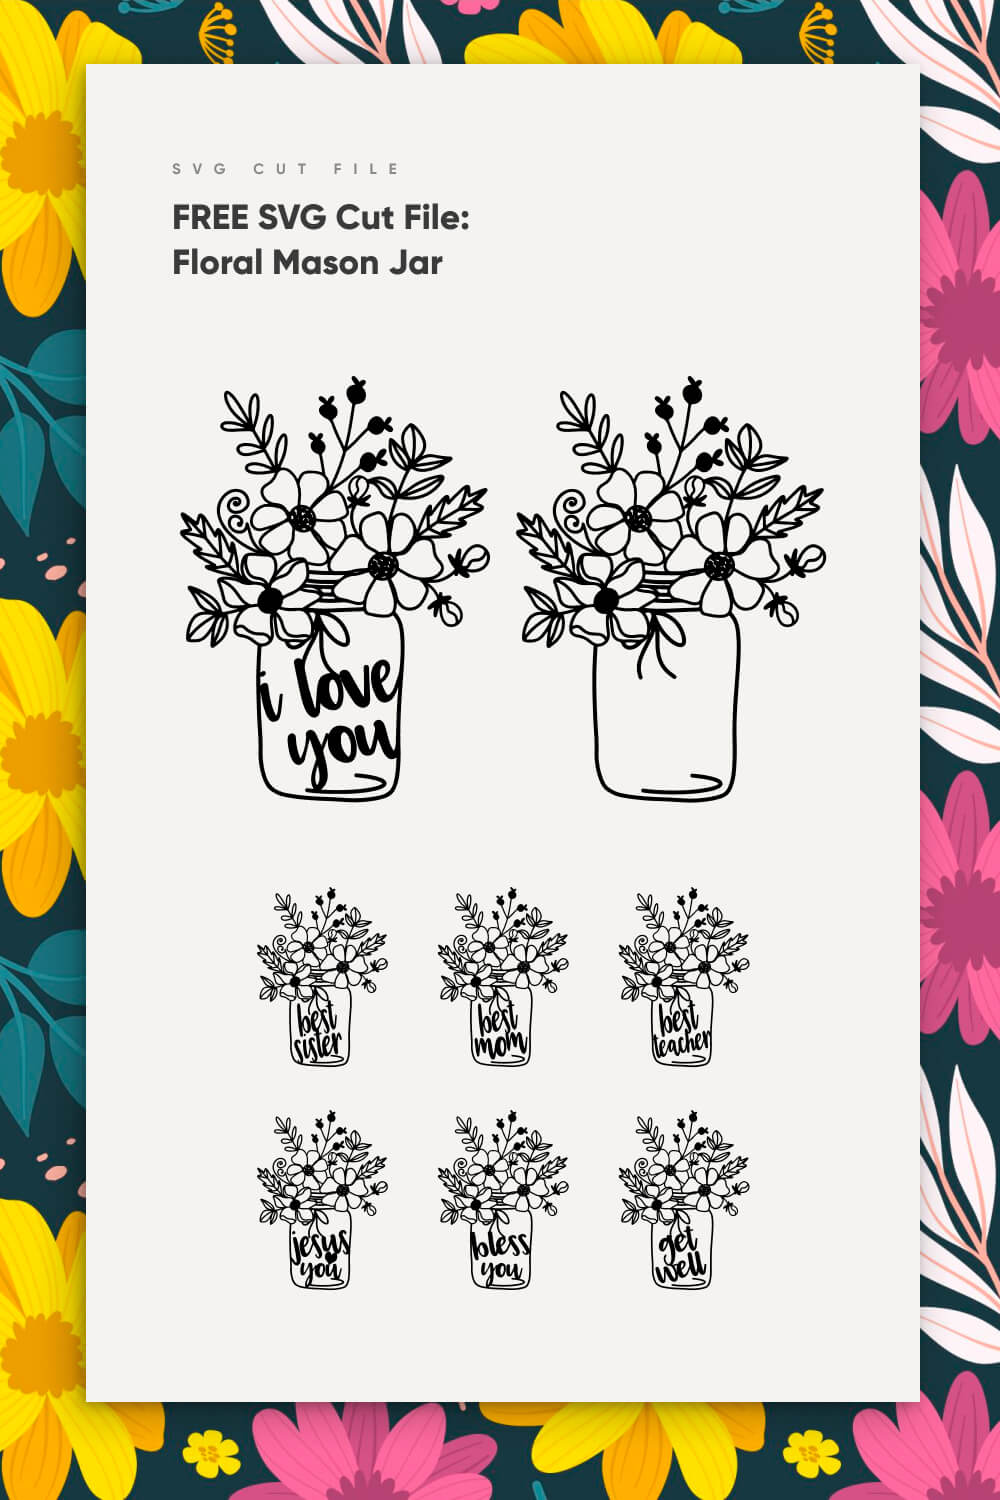 FREE SVG Cut File: Floral Mason Jar pinterest.